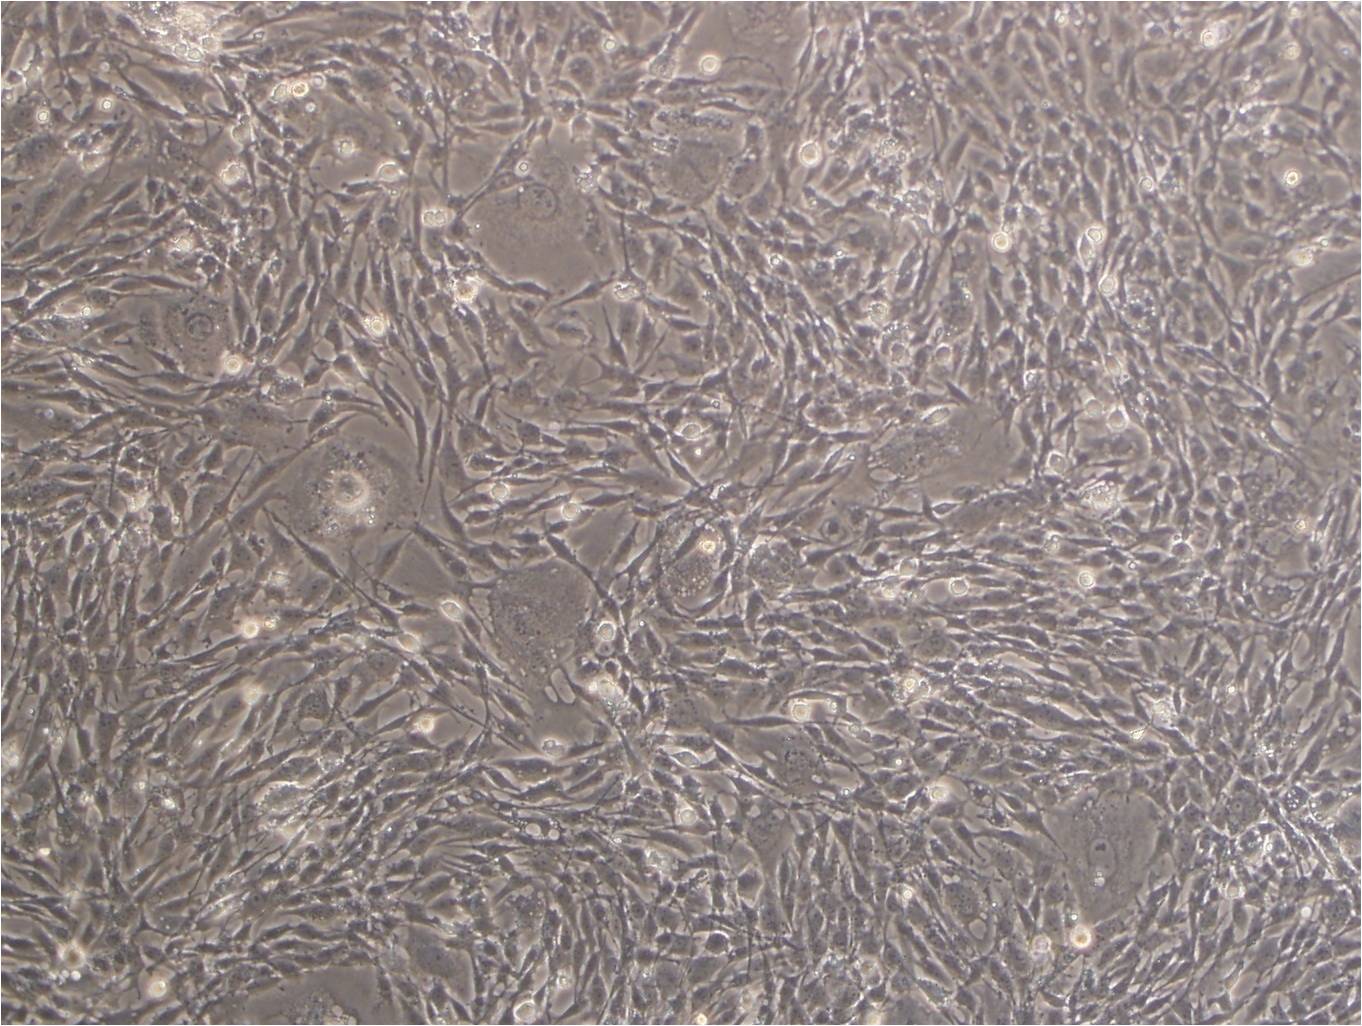 SW1088 Cell:人脑星形胶质瘤细胞系